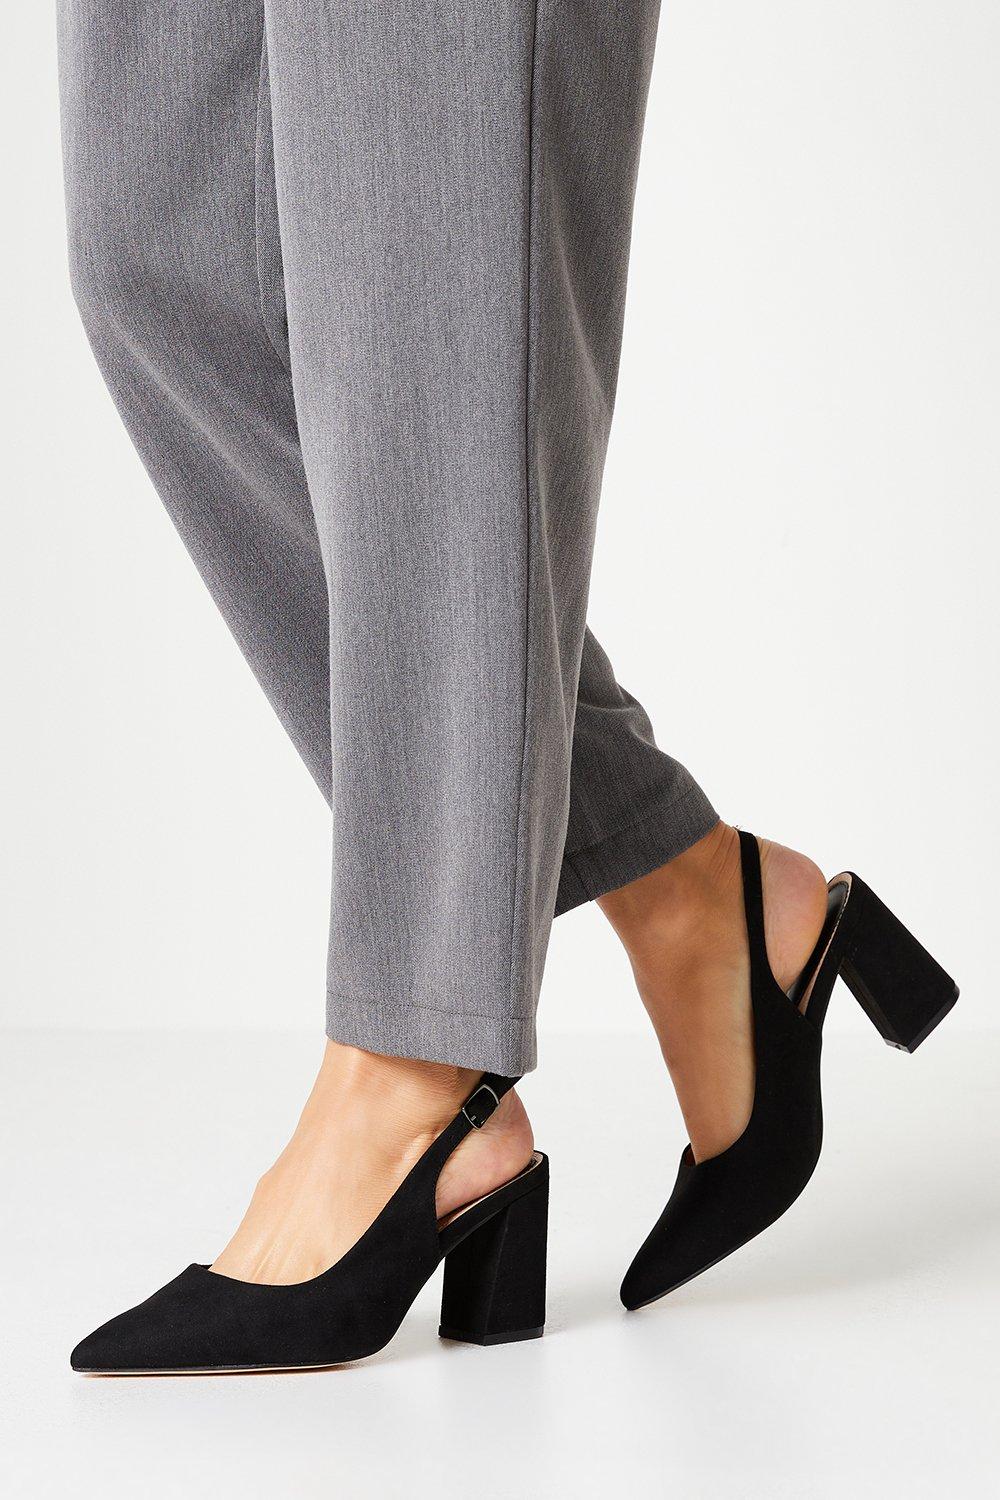 Women’s Wide Fit Ellen Pointed Block Heel Slingback Court Shoes - natural black - 7